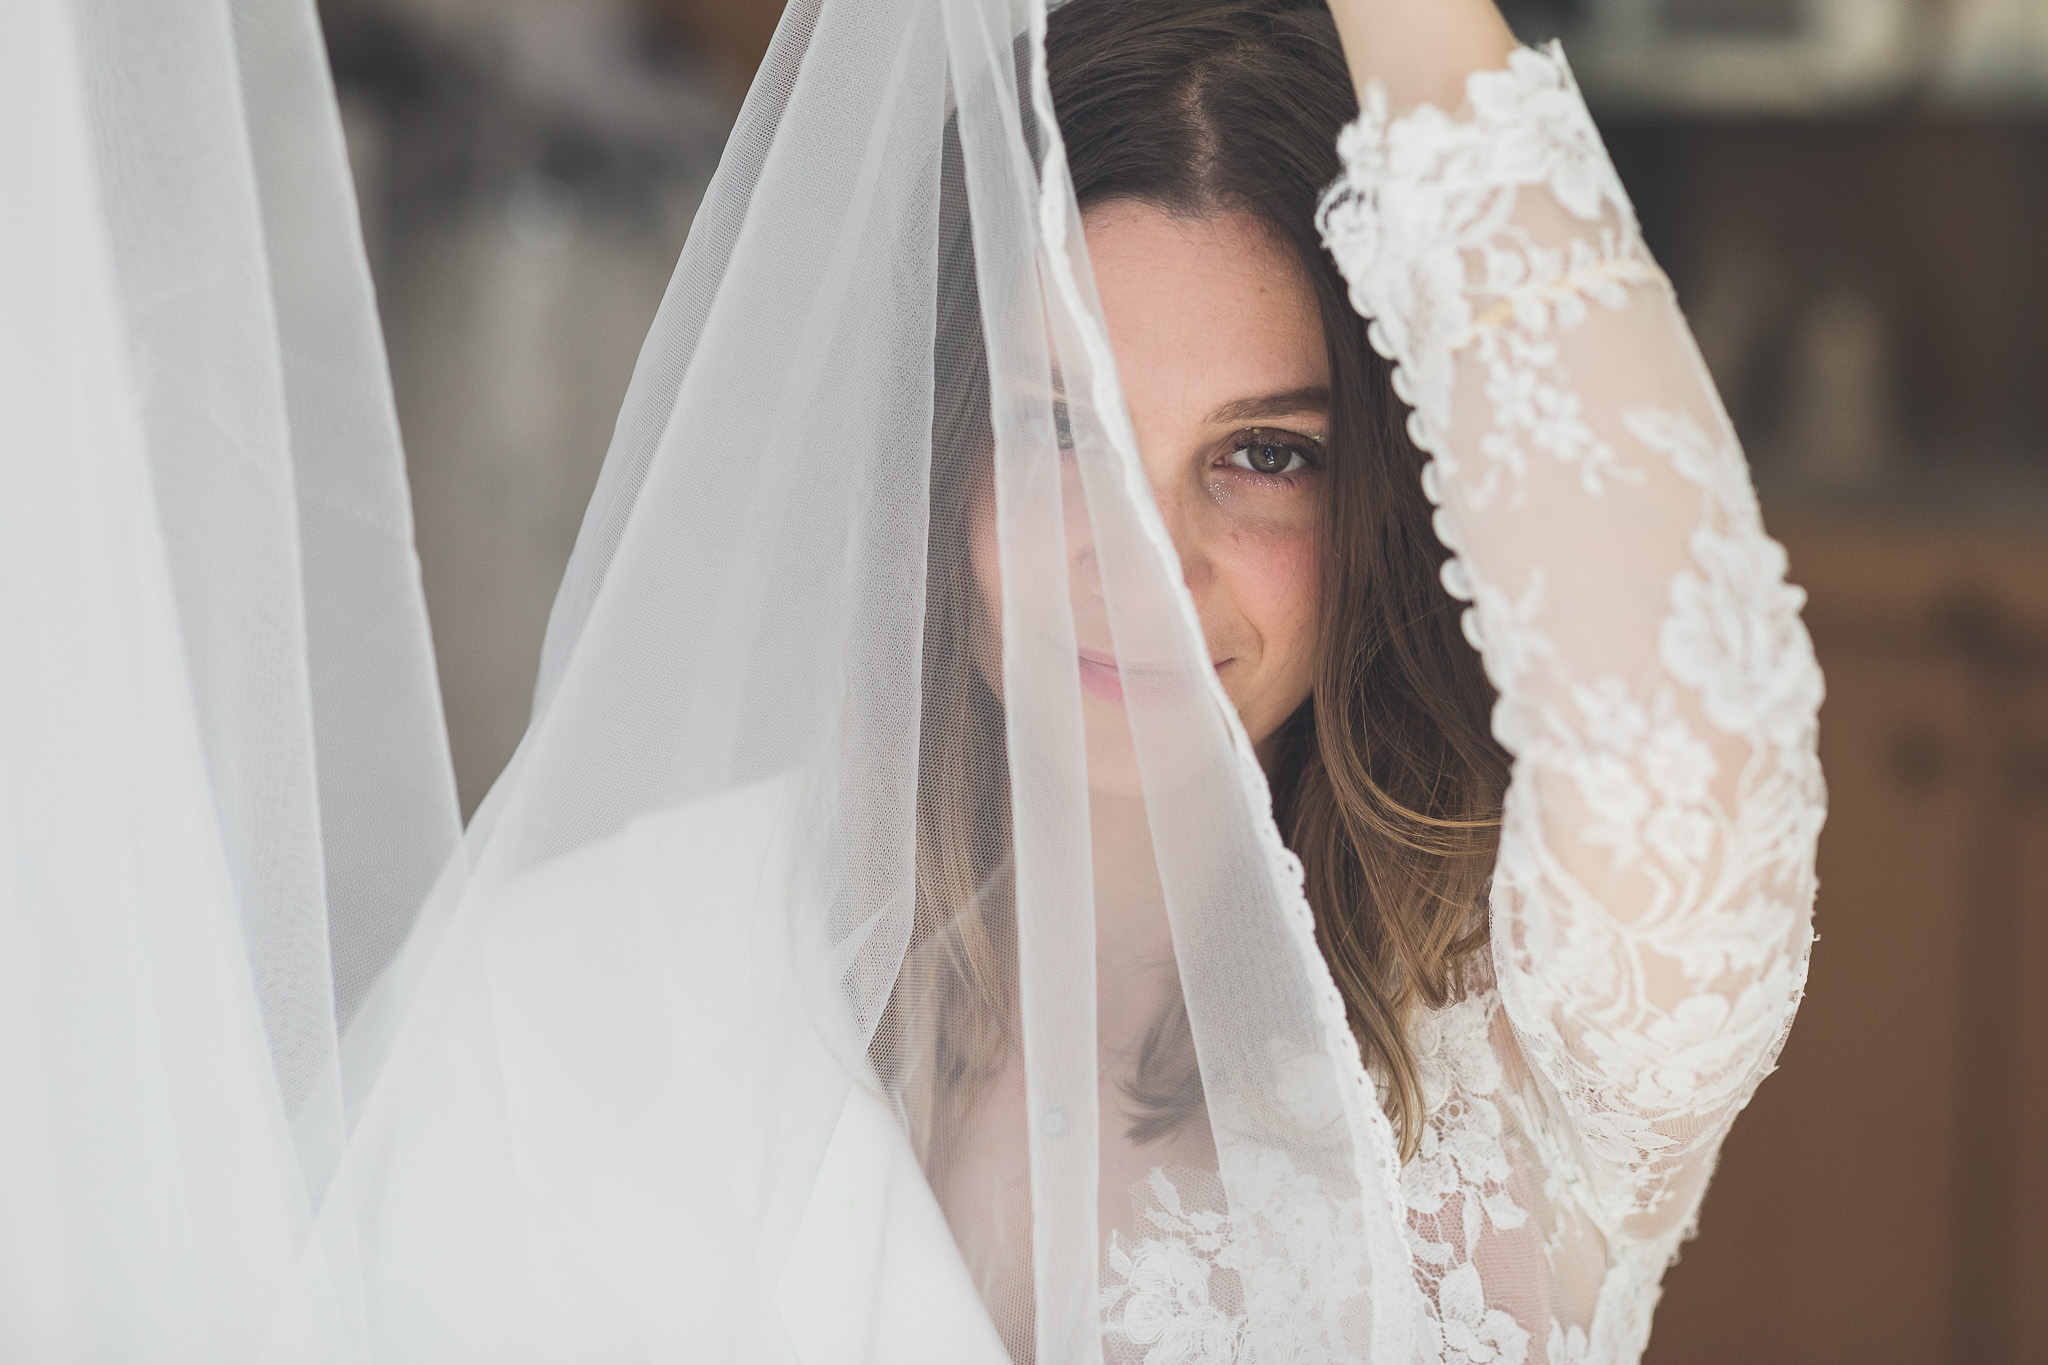 kathia koy photographie - shooting photo mariage - robe de mariée